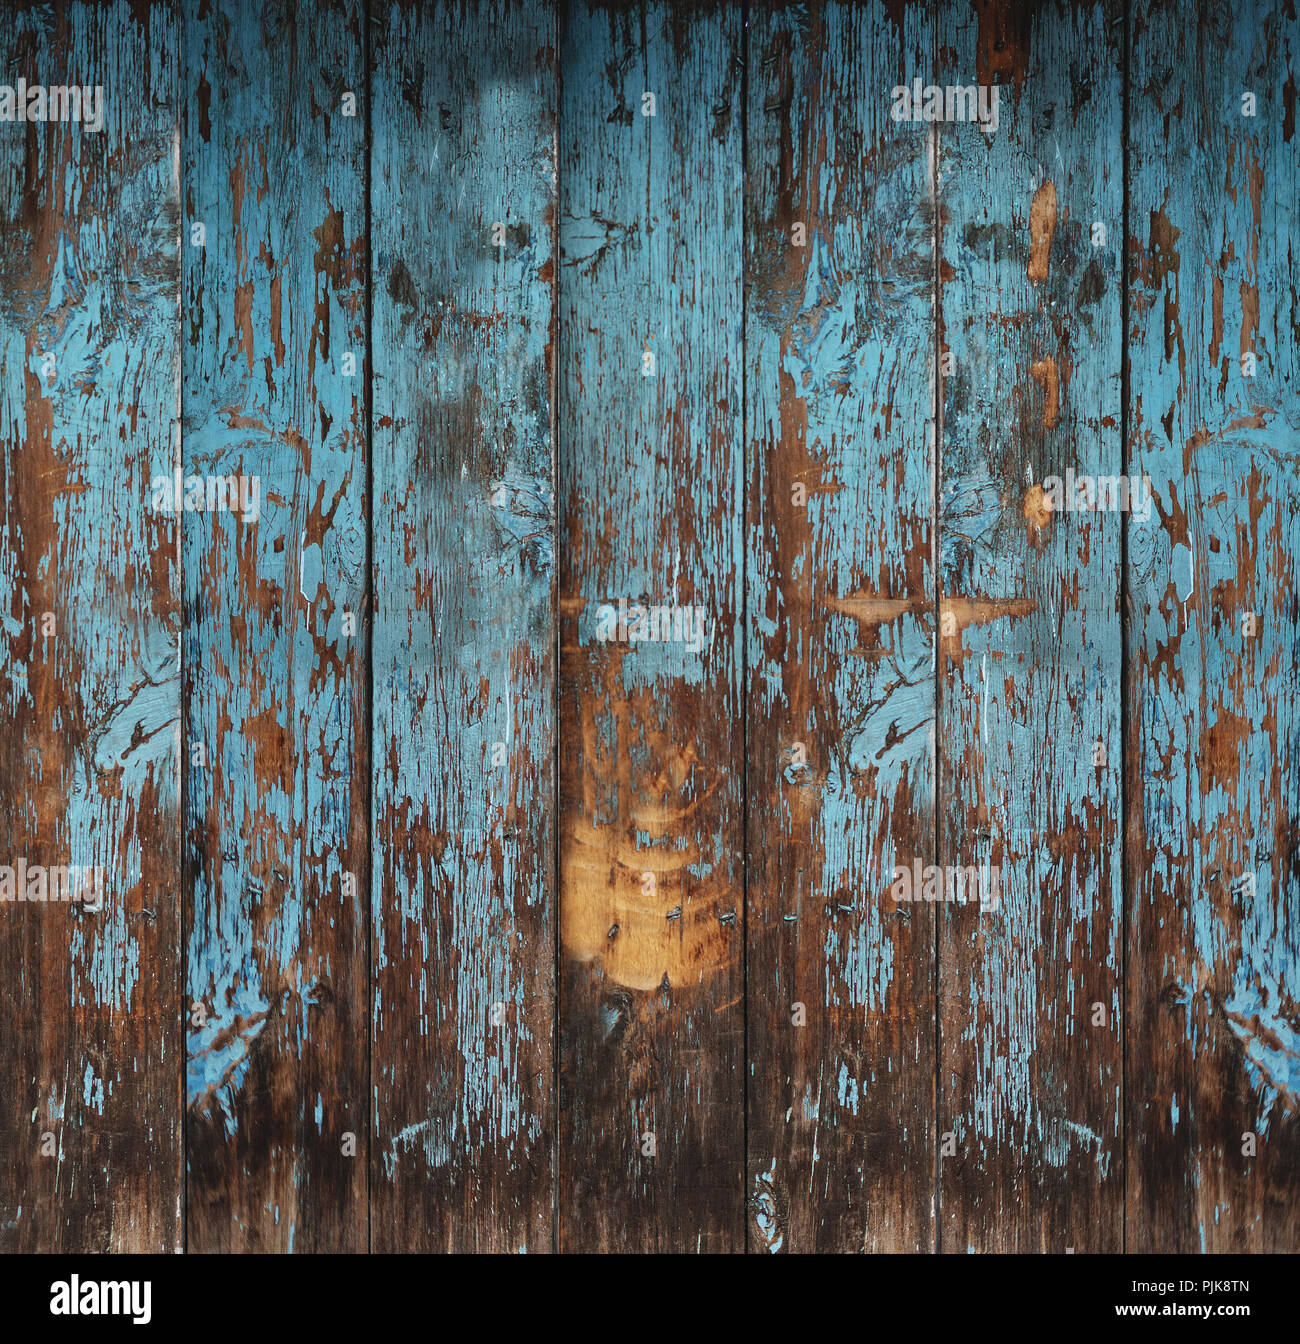 Holz Textur, Peeling blau lackiert Holz für Hintergrund Stockfoto